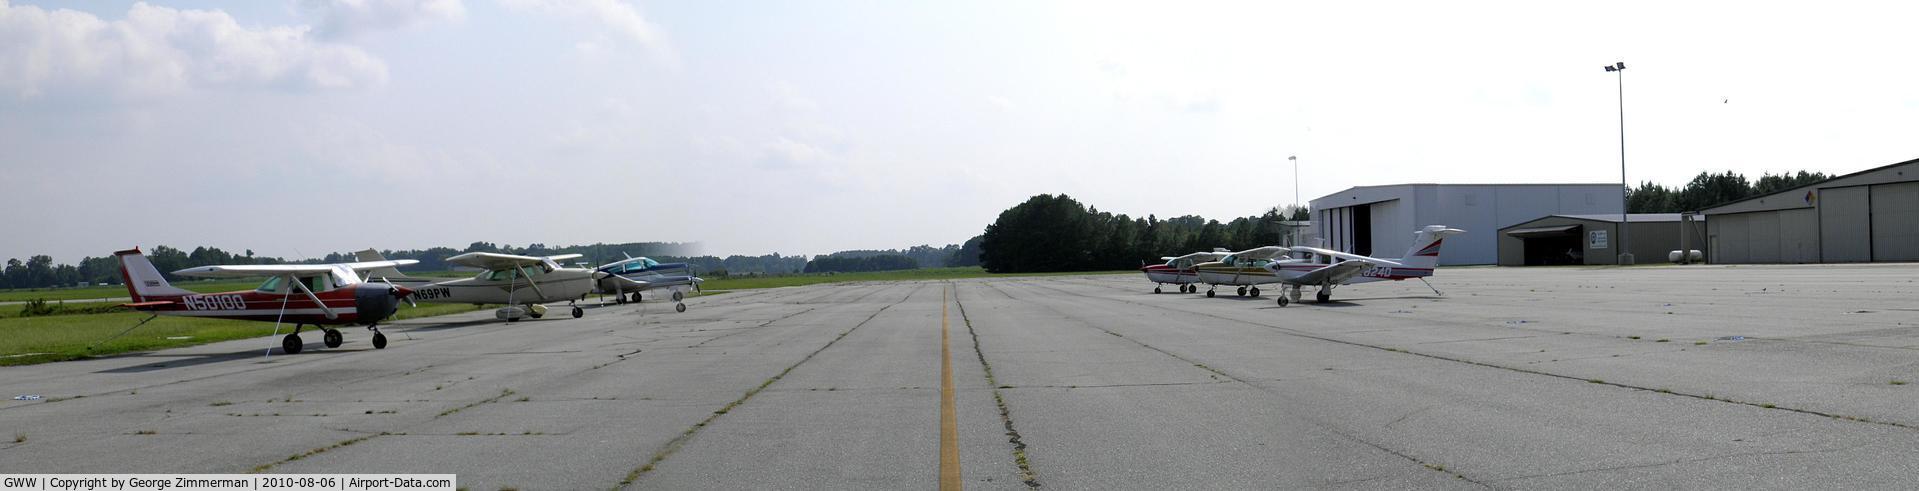 Wayne Executive Jetport Airport (GWW) - Aircracft Parking and south hangers at Goldsboro-Wayne